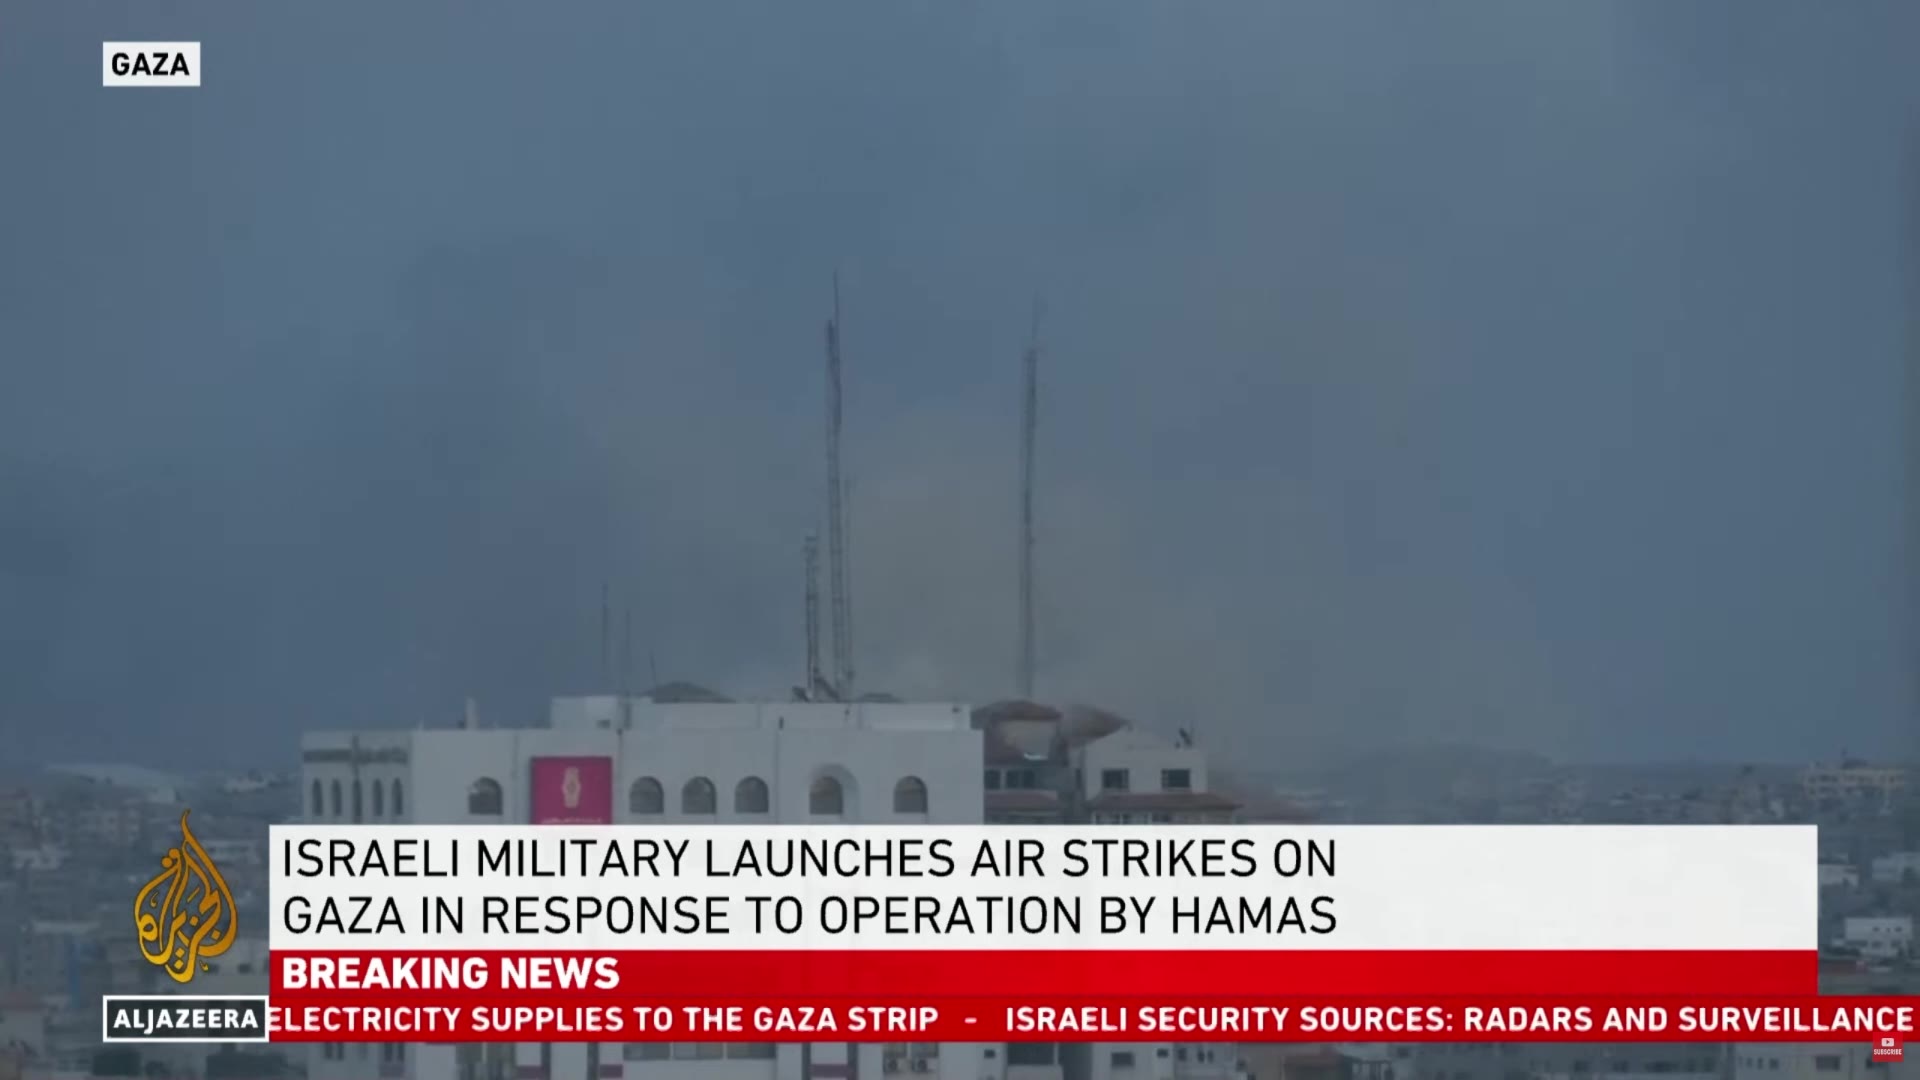 Al Jazeera Gaza